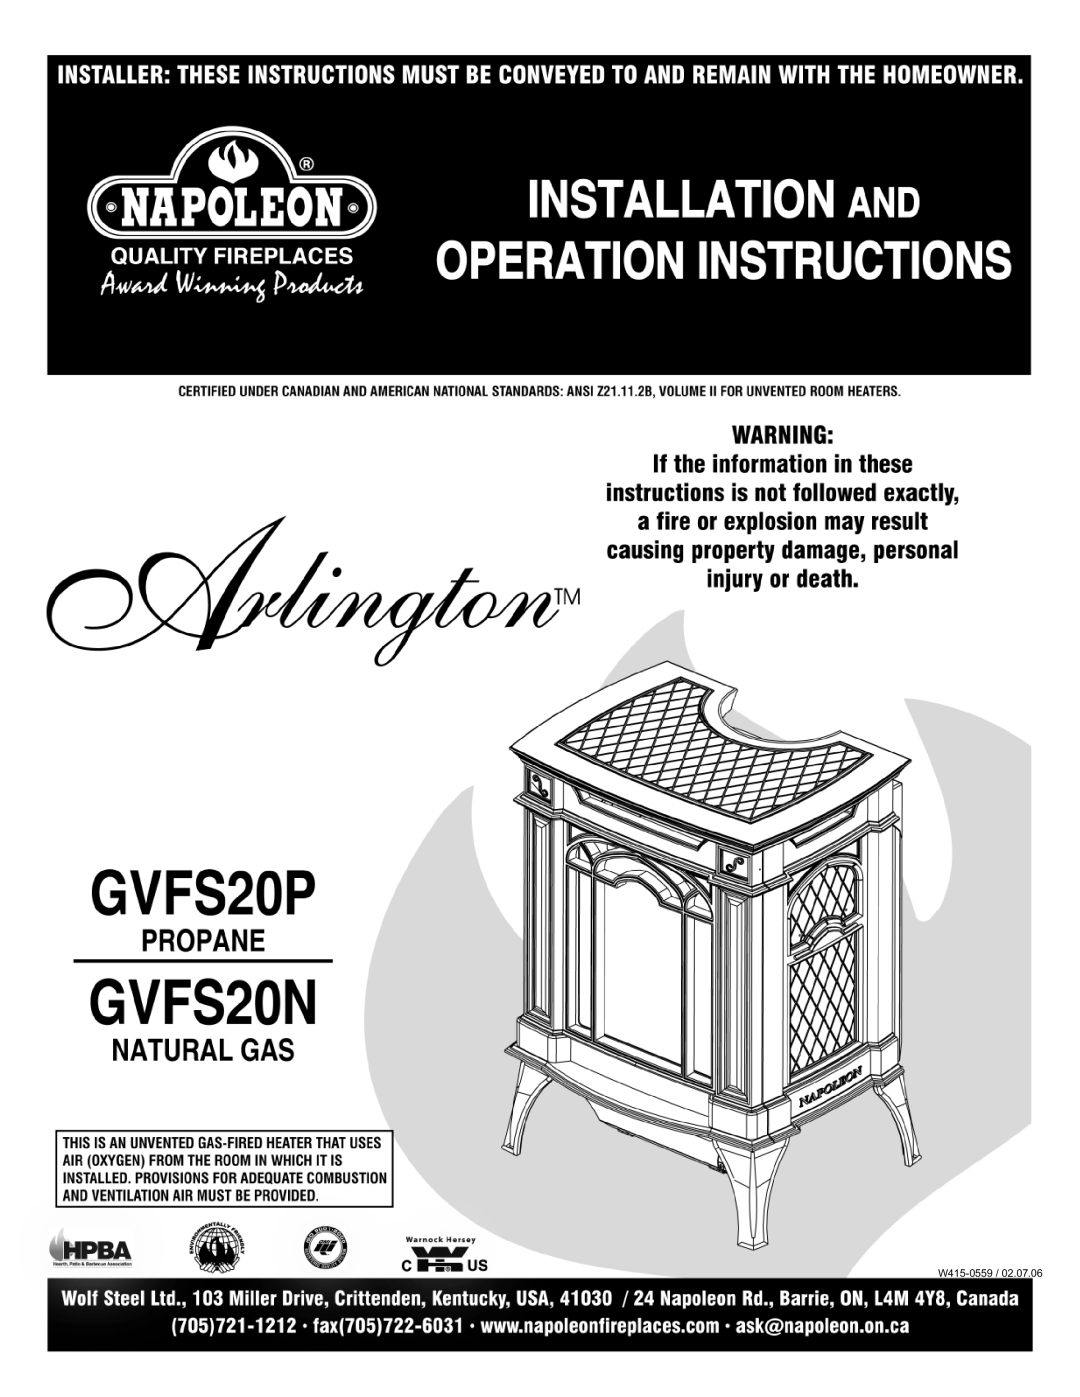 Napoleon Fireplaces GVFS20P, GVFS20N manual W415-0559 /02.07.06, W415-0559 /02.15.06 